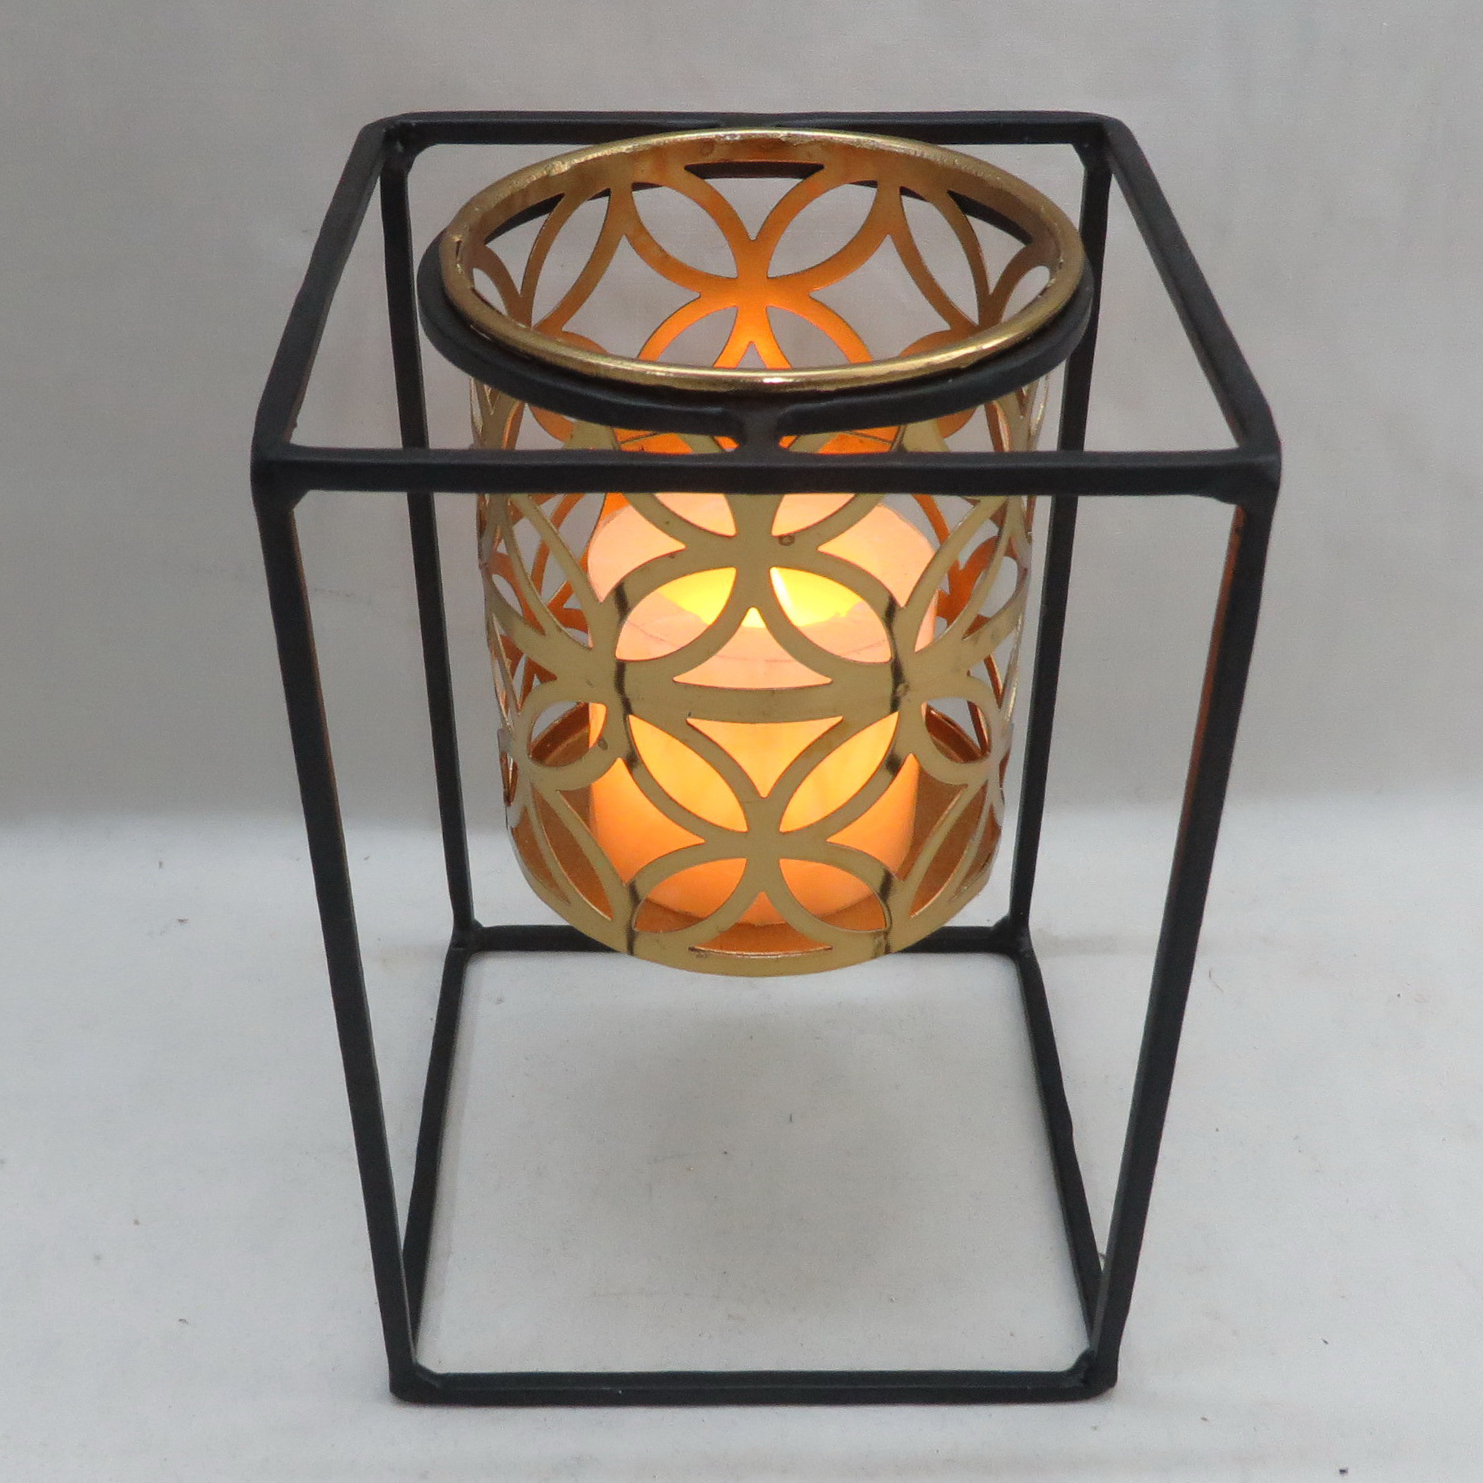 Hurricane metal decorative tealight candle holder